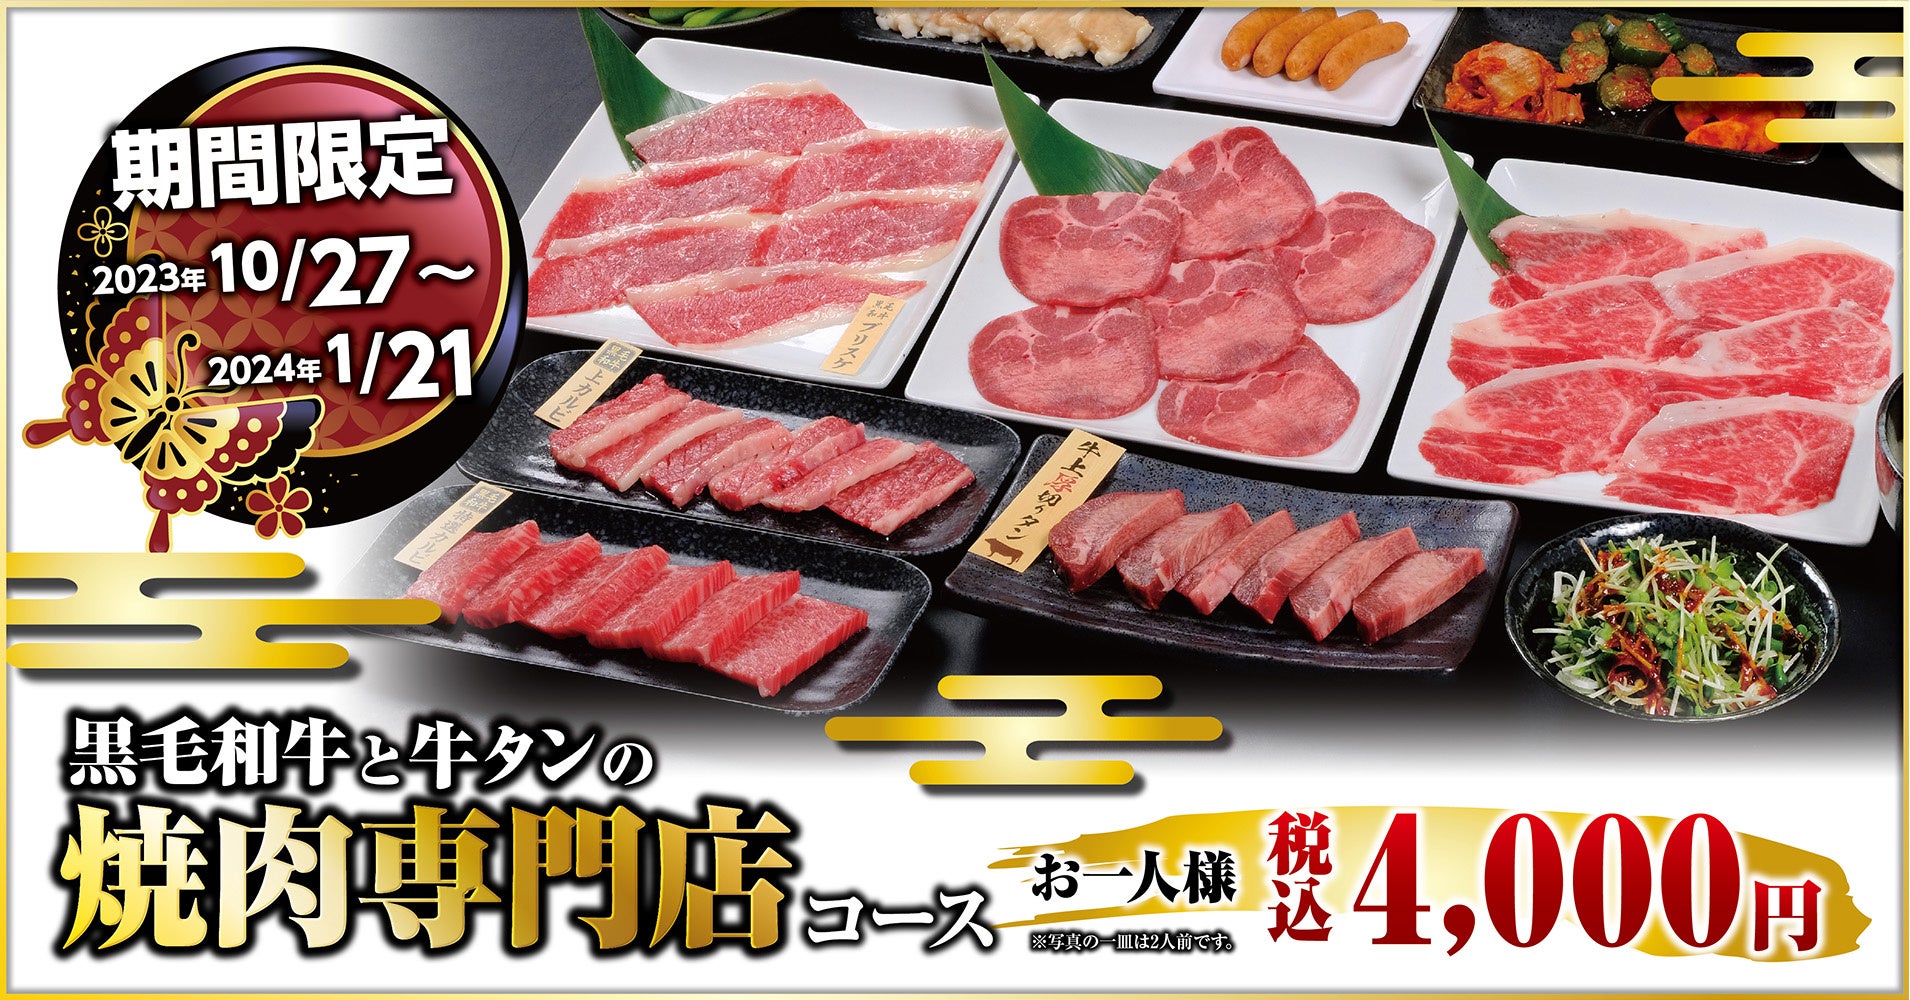 ONE@Tokyo　一汁三菜の健康的な朝食メニューが新登場　虎ノ門行列店の味を11月1日(水)から提供開始